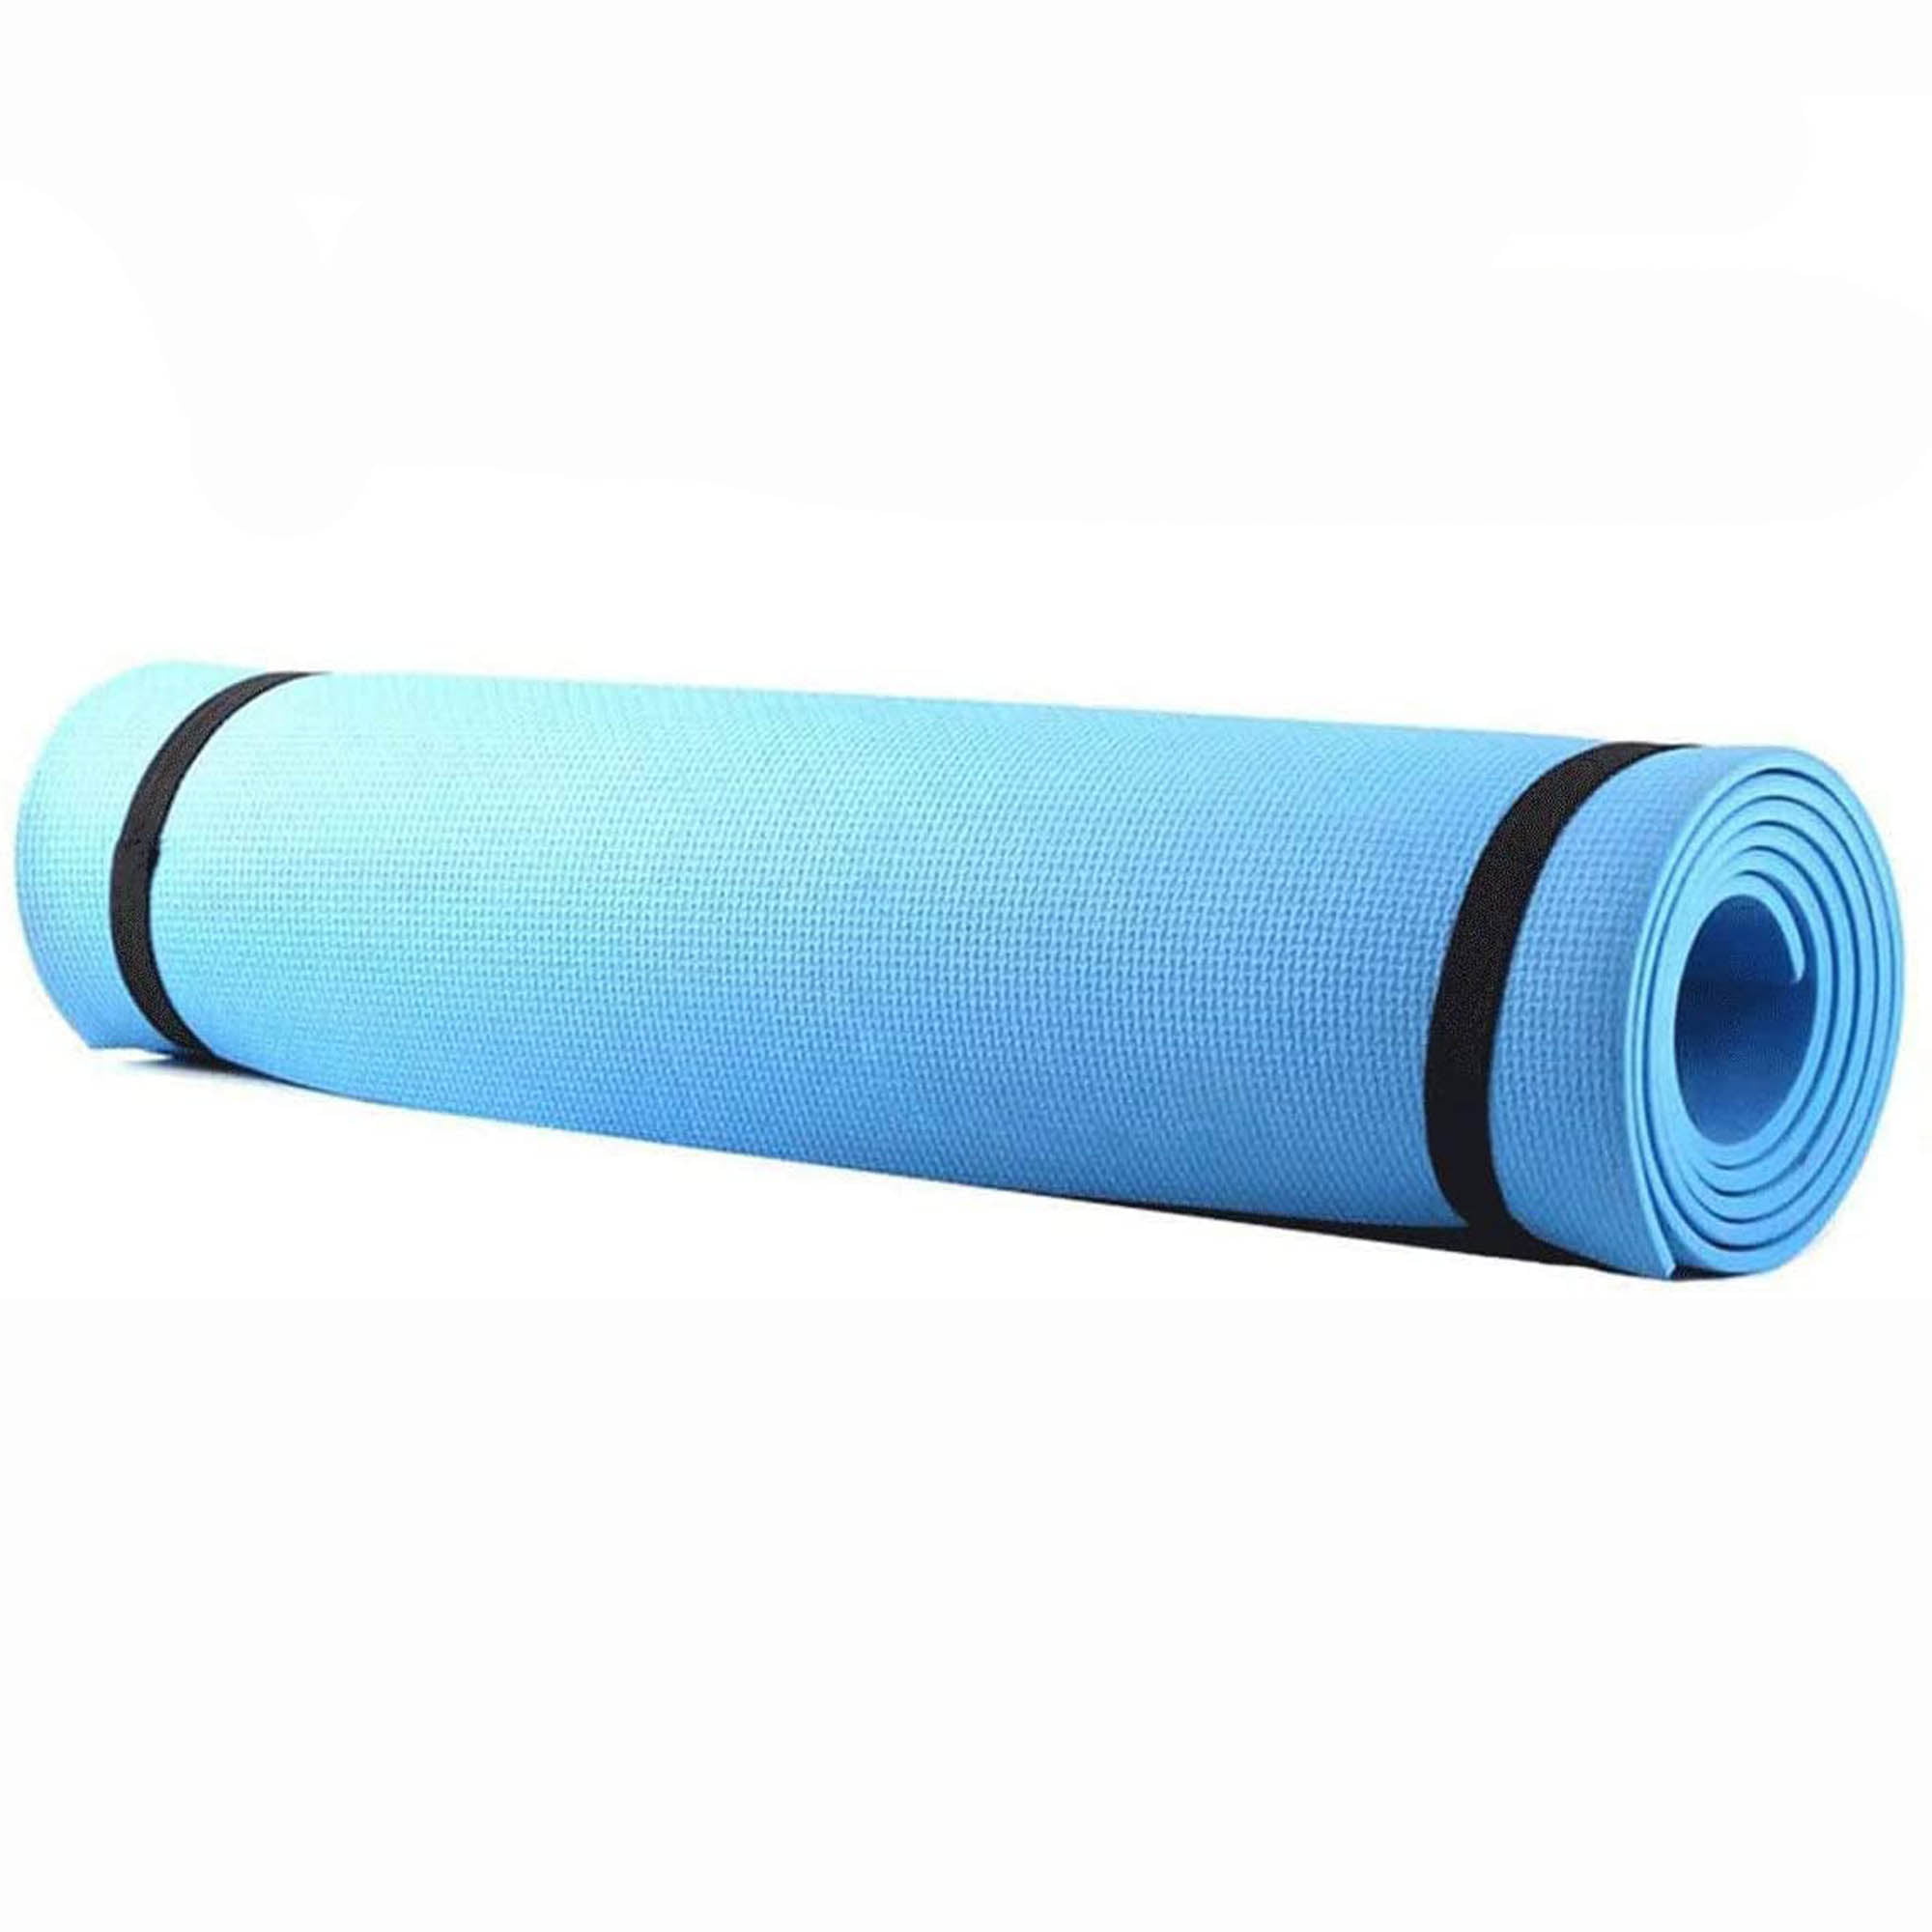 15mm Extra Thick Yoga Mat Non Slip Exercise Pilates Gym Picnic Camping Strap Bag 